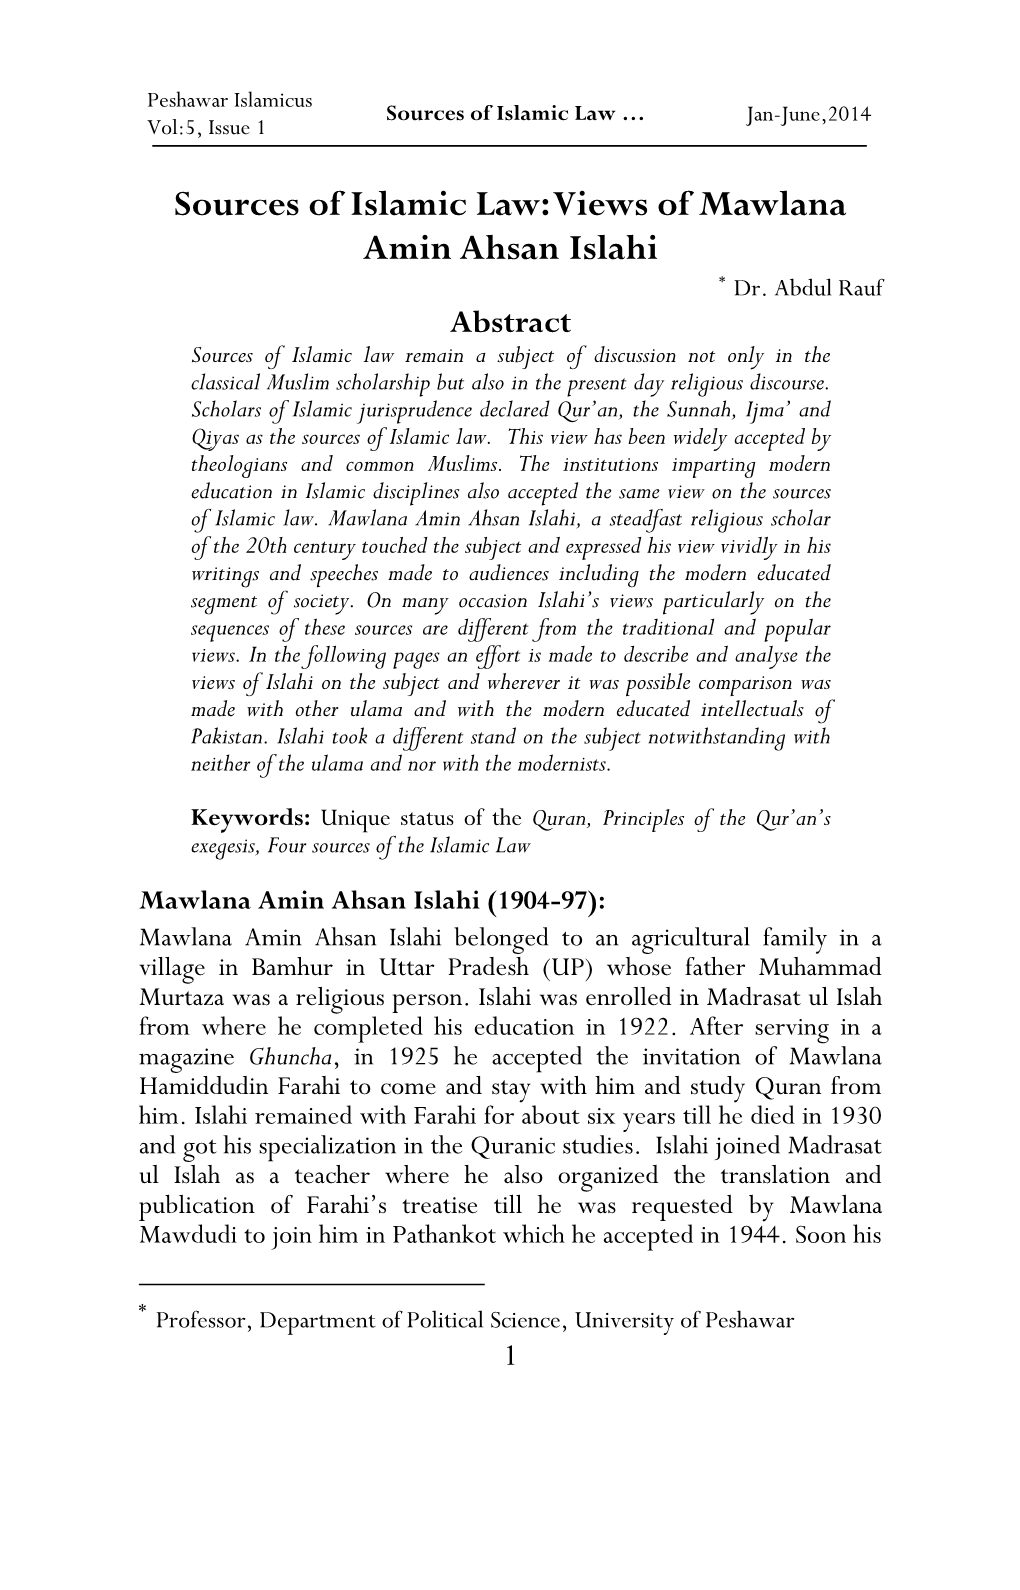 Sources of Islamic Law: Views of Mawlana Amin Ahsan Islahi  Dr